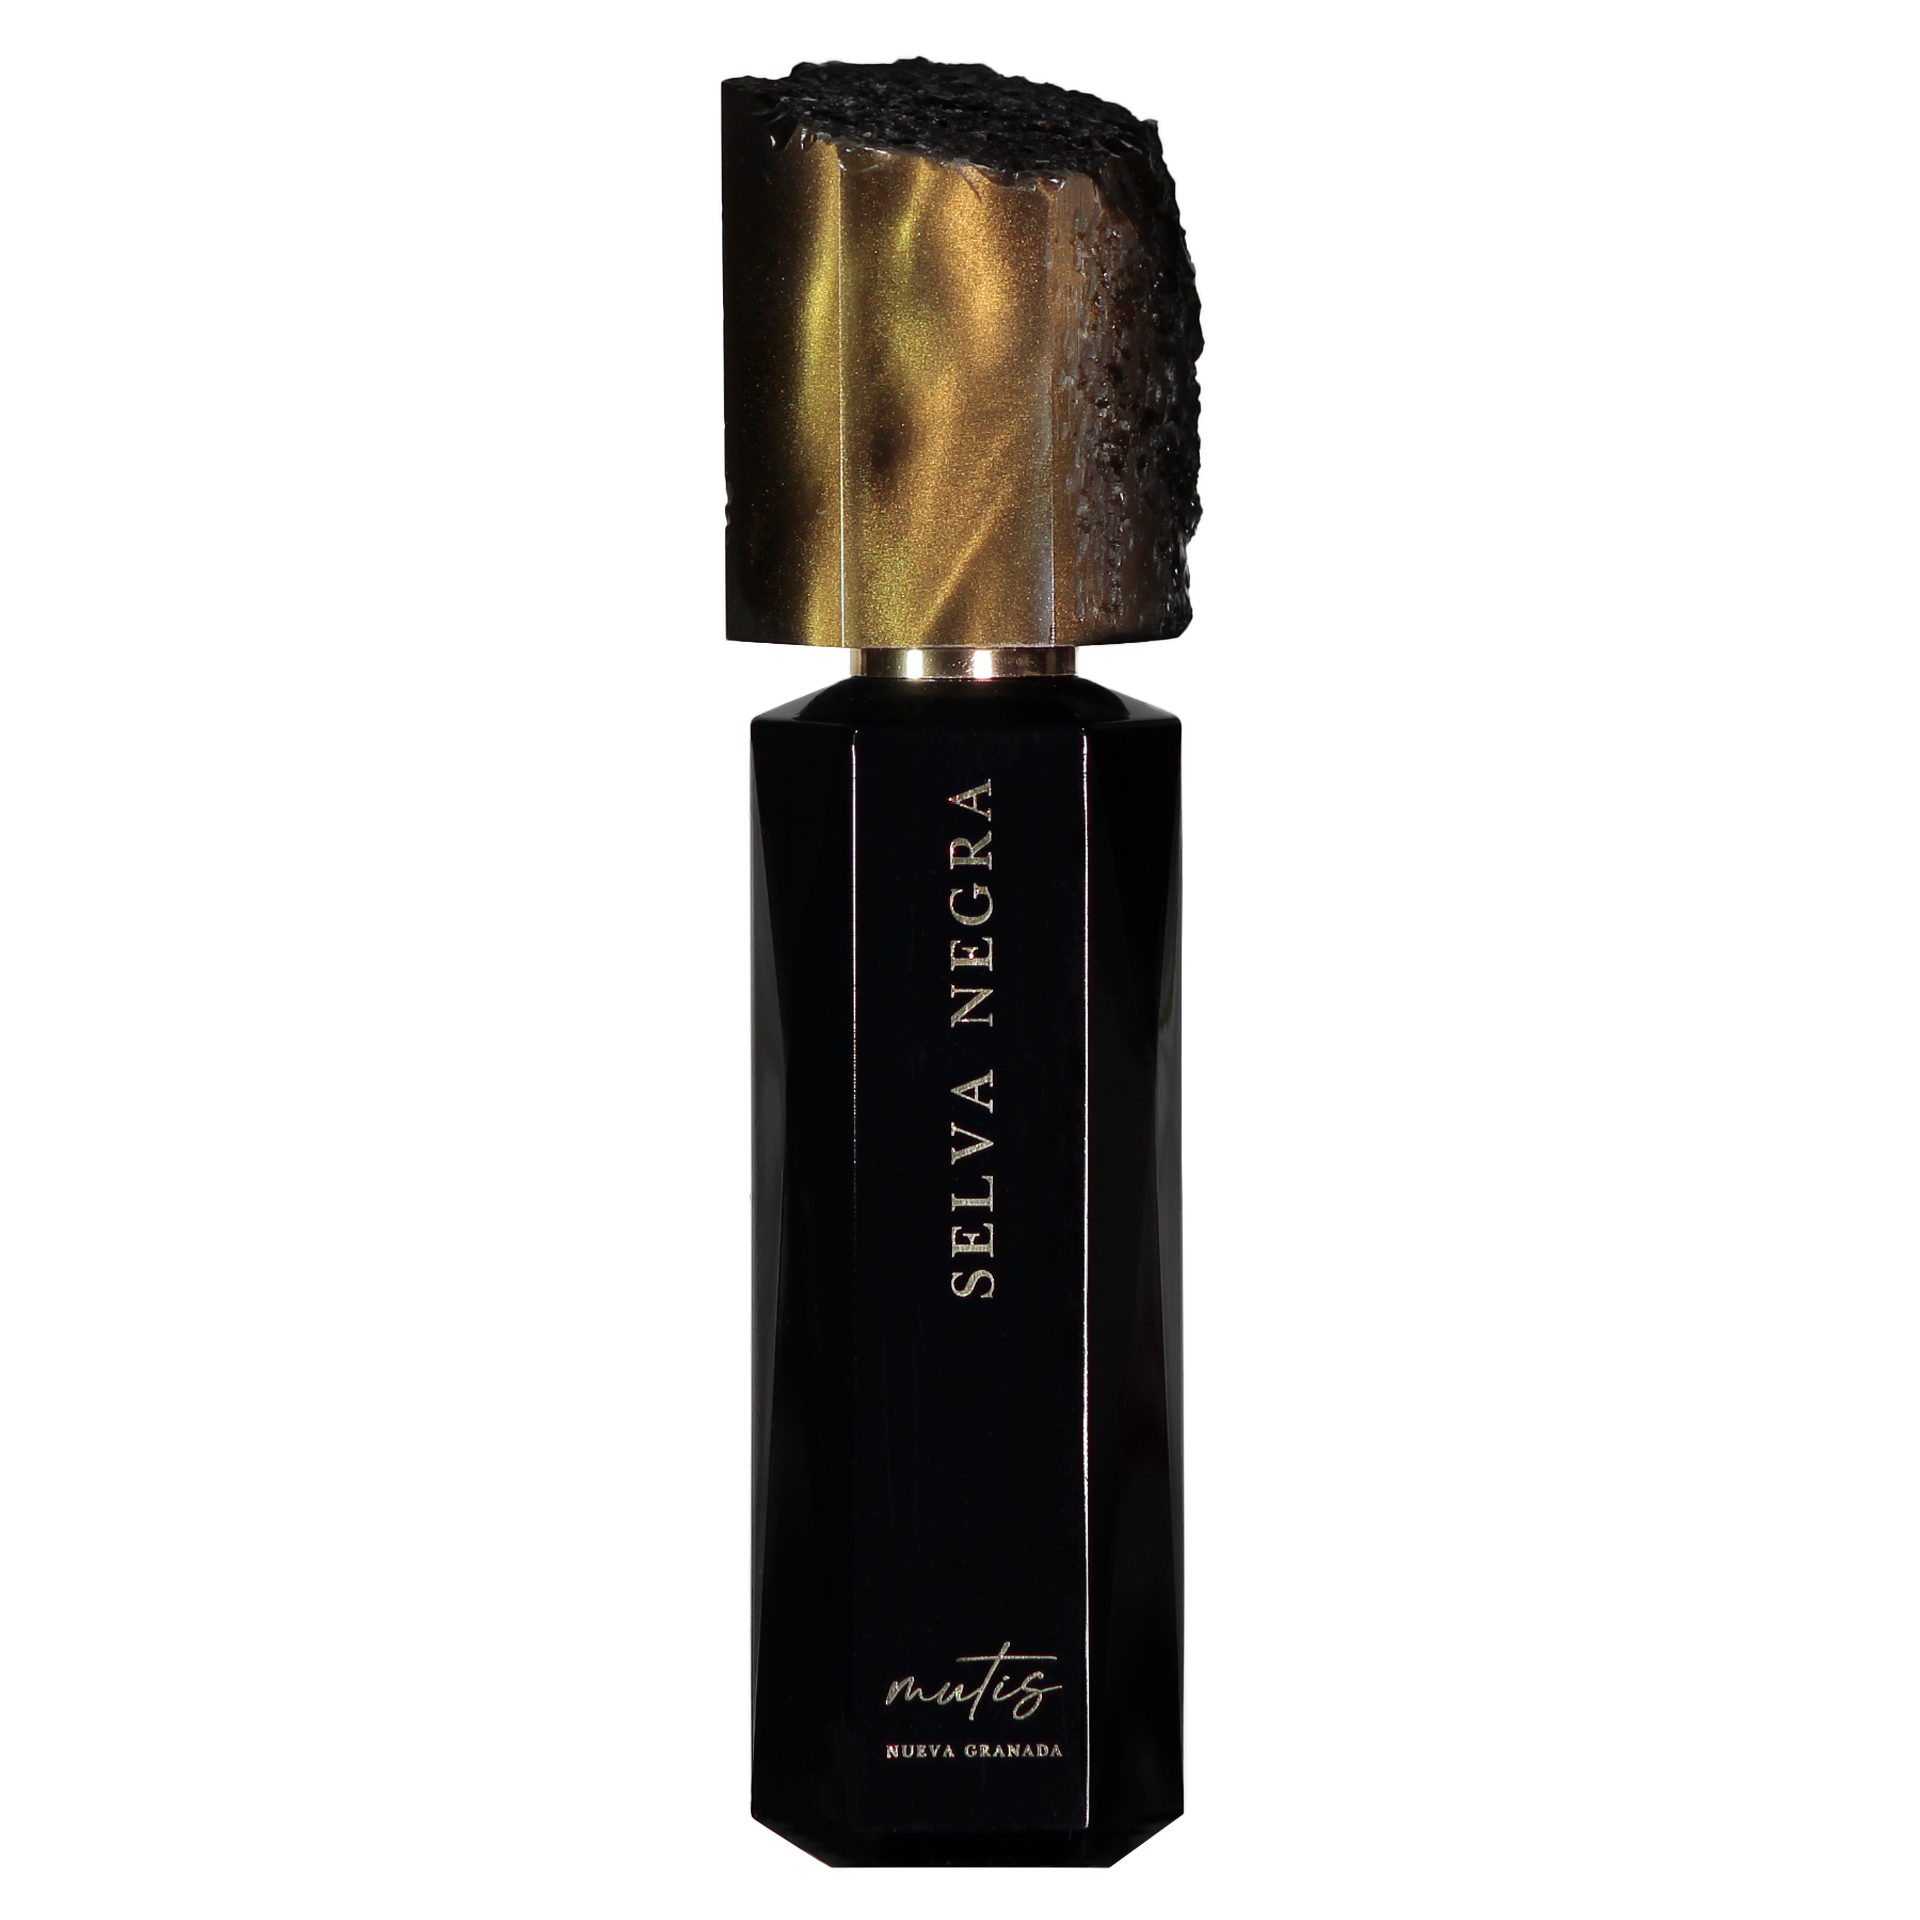 selva negra mutis nueva granada daring light perfumes niche barcelona - Selva Negra